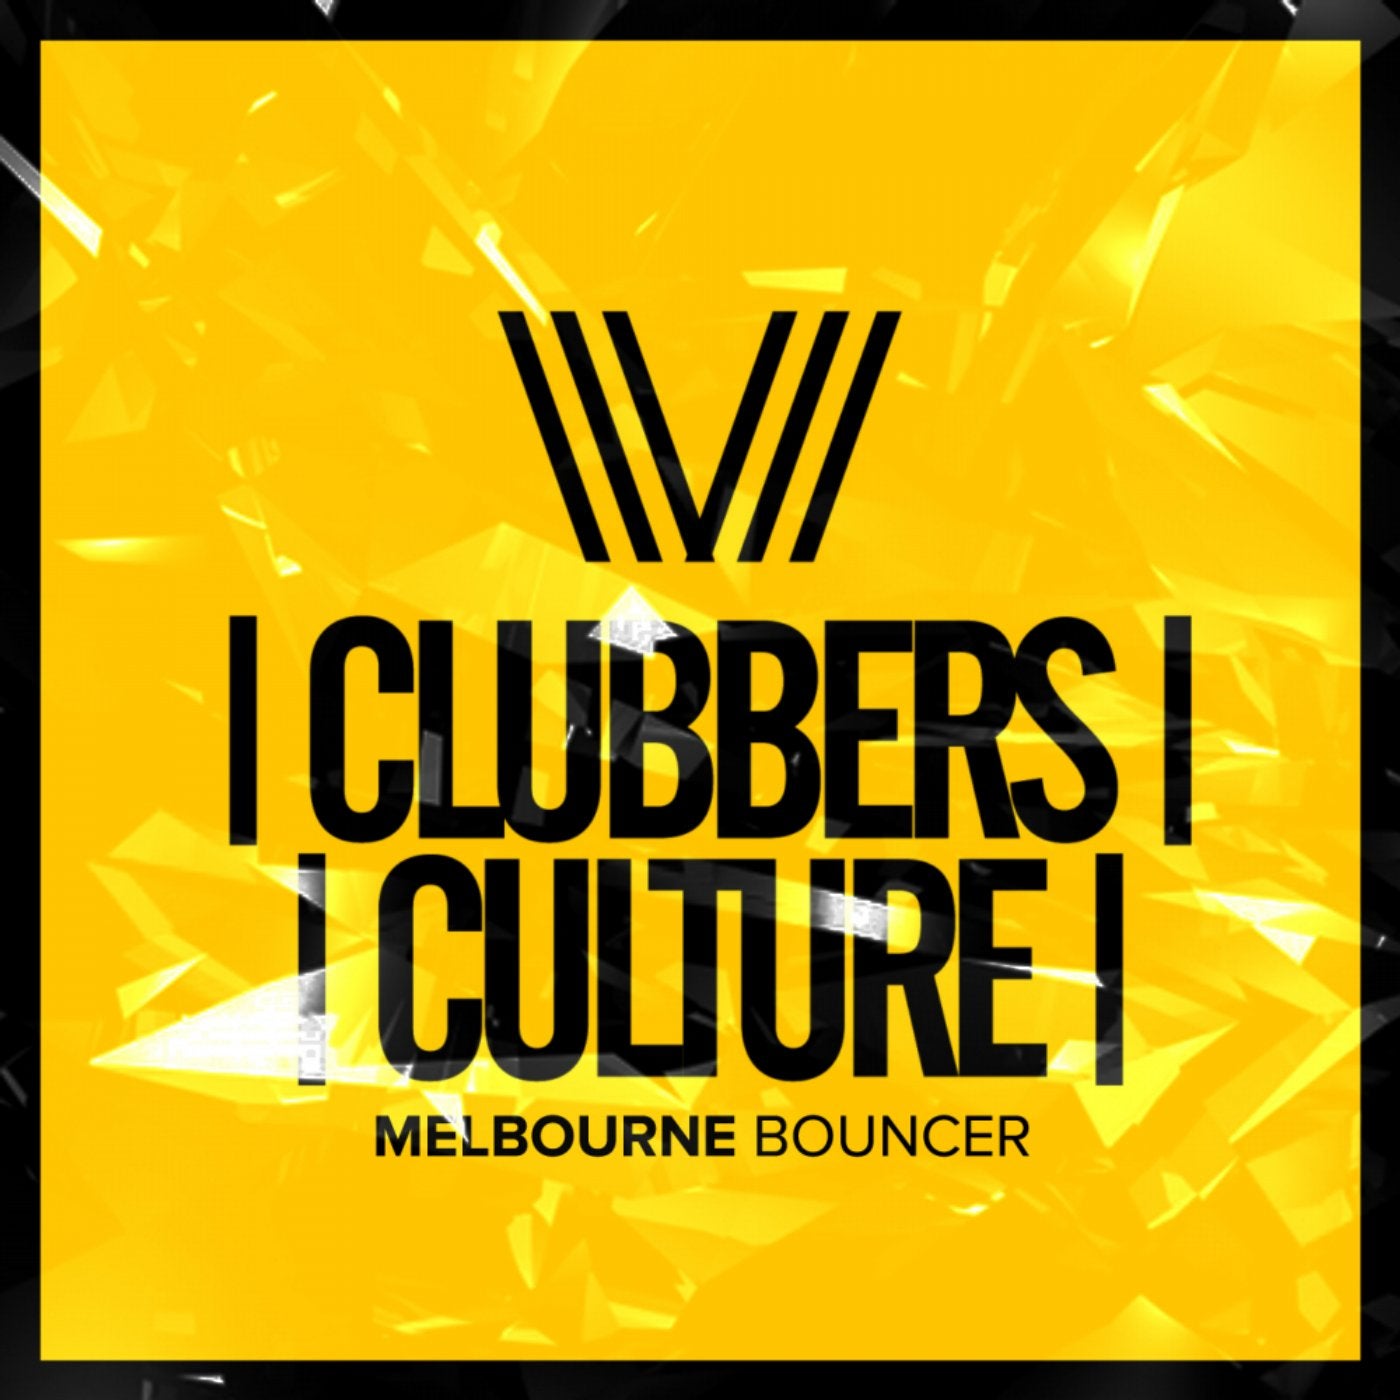 Clubbers Culture: Melbourne Bouncer